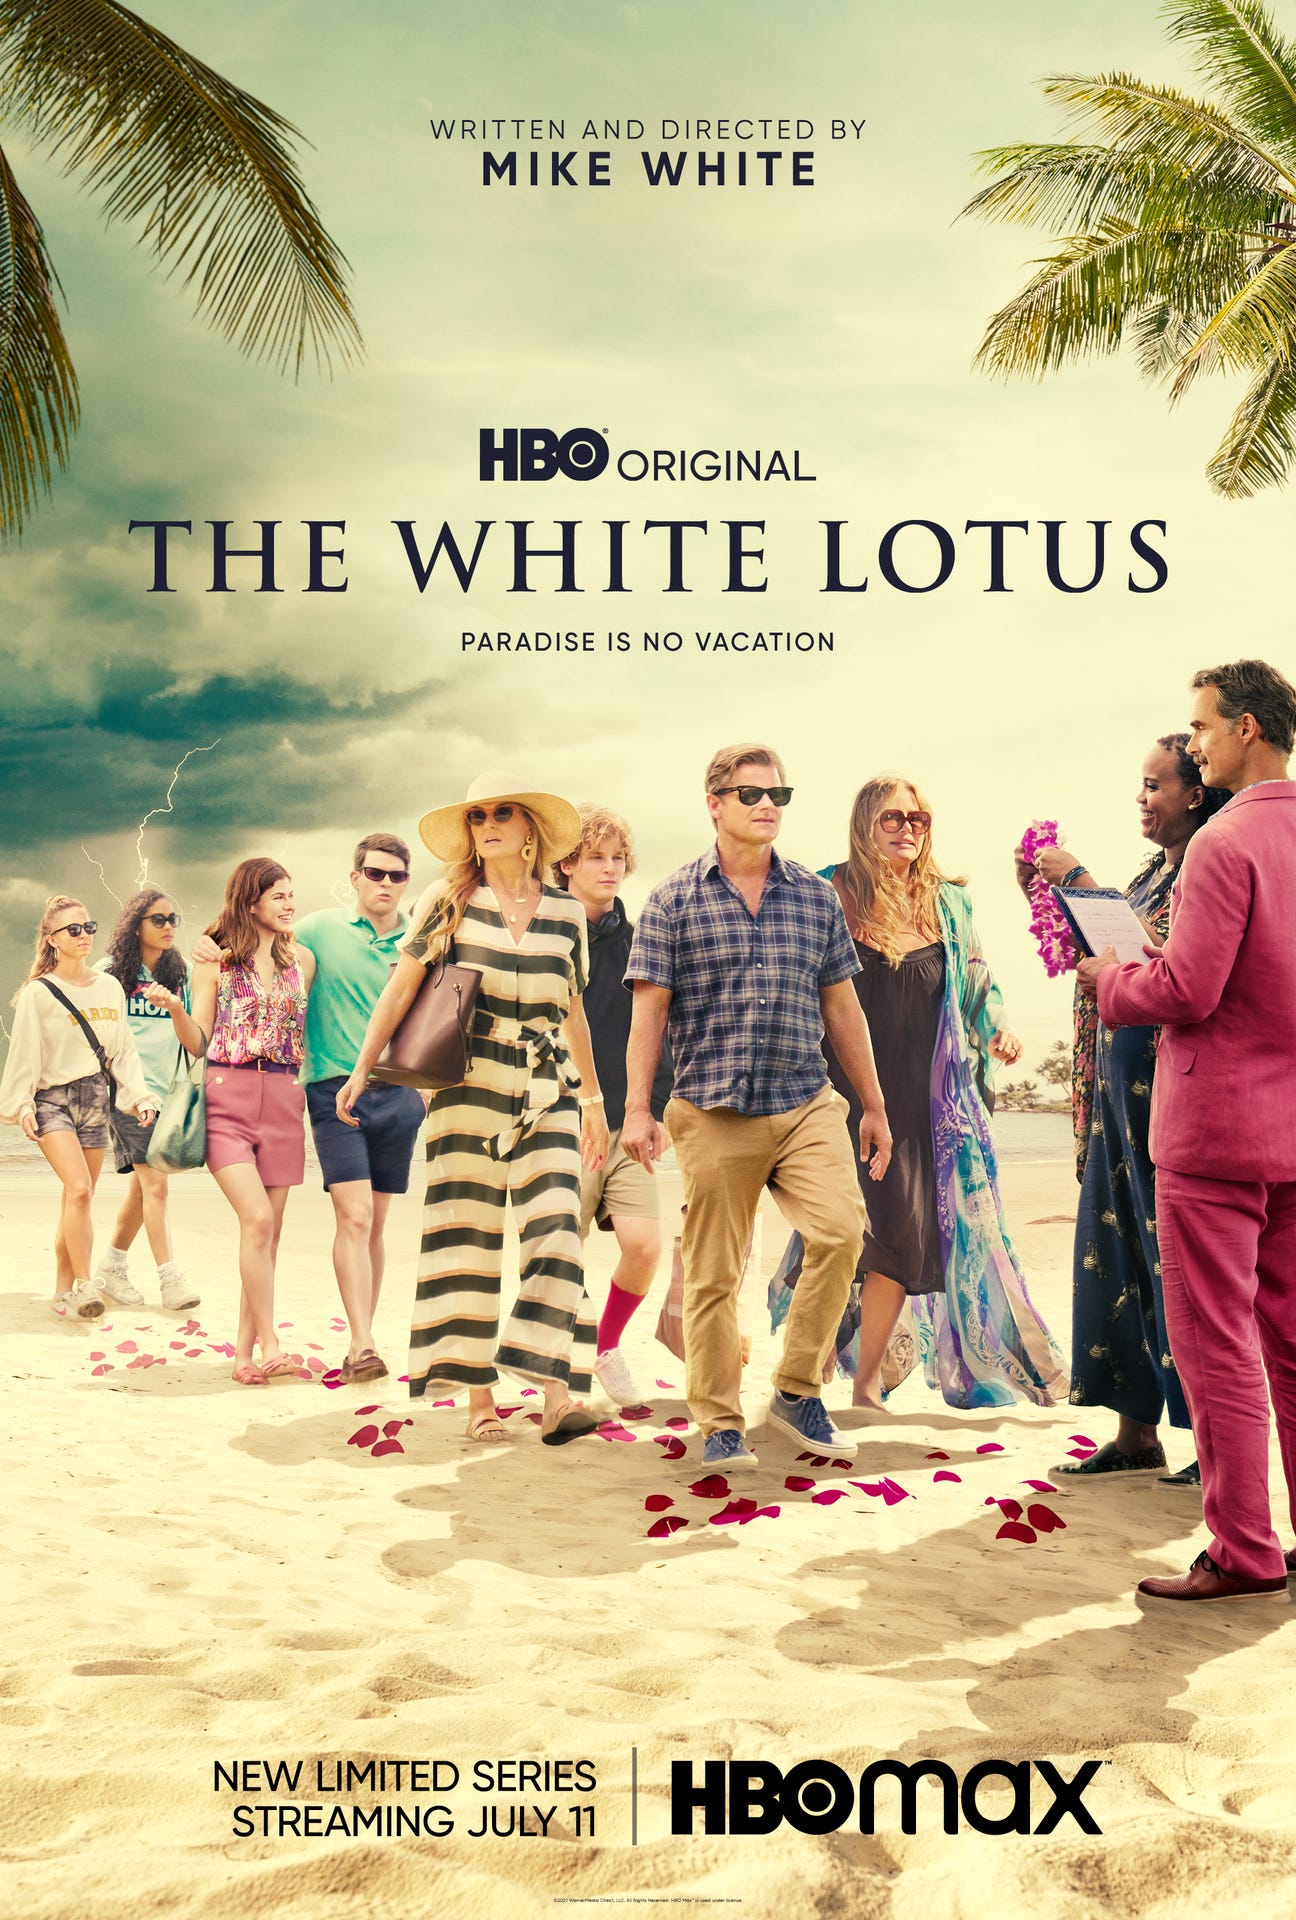 The White Lotus episode 3: Jennifer Coolidge's acting masterclass